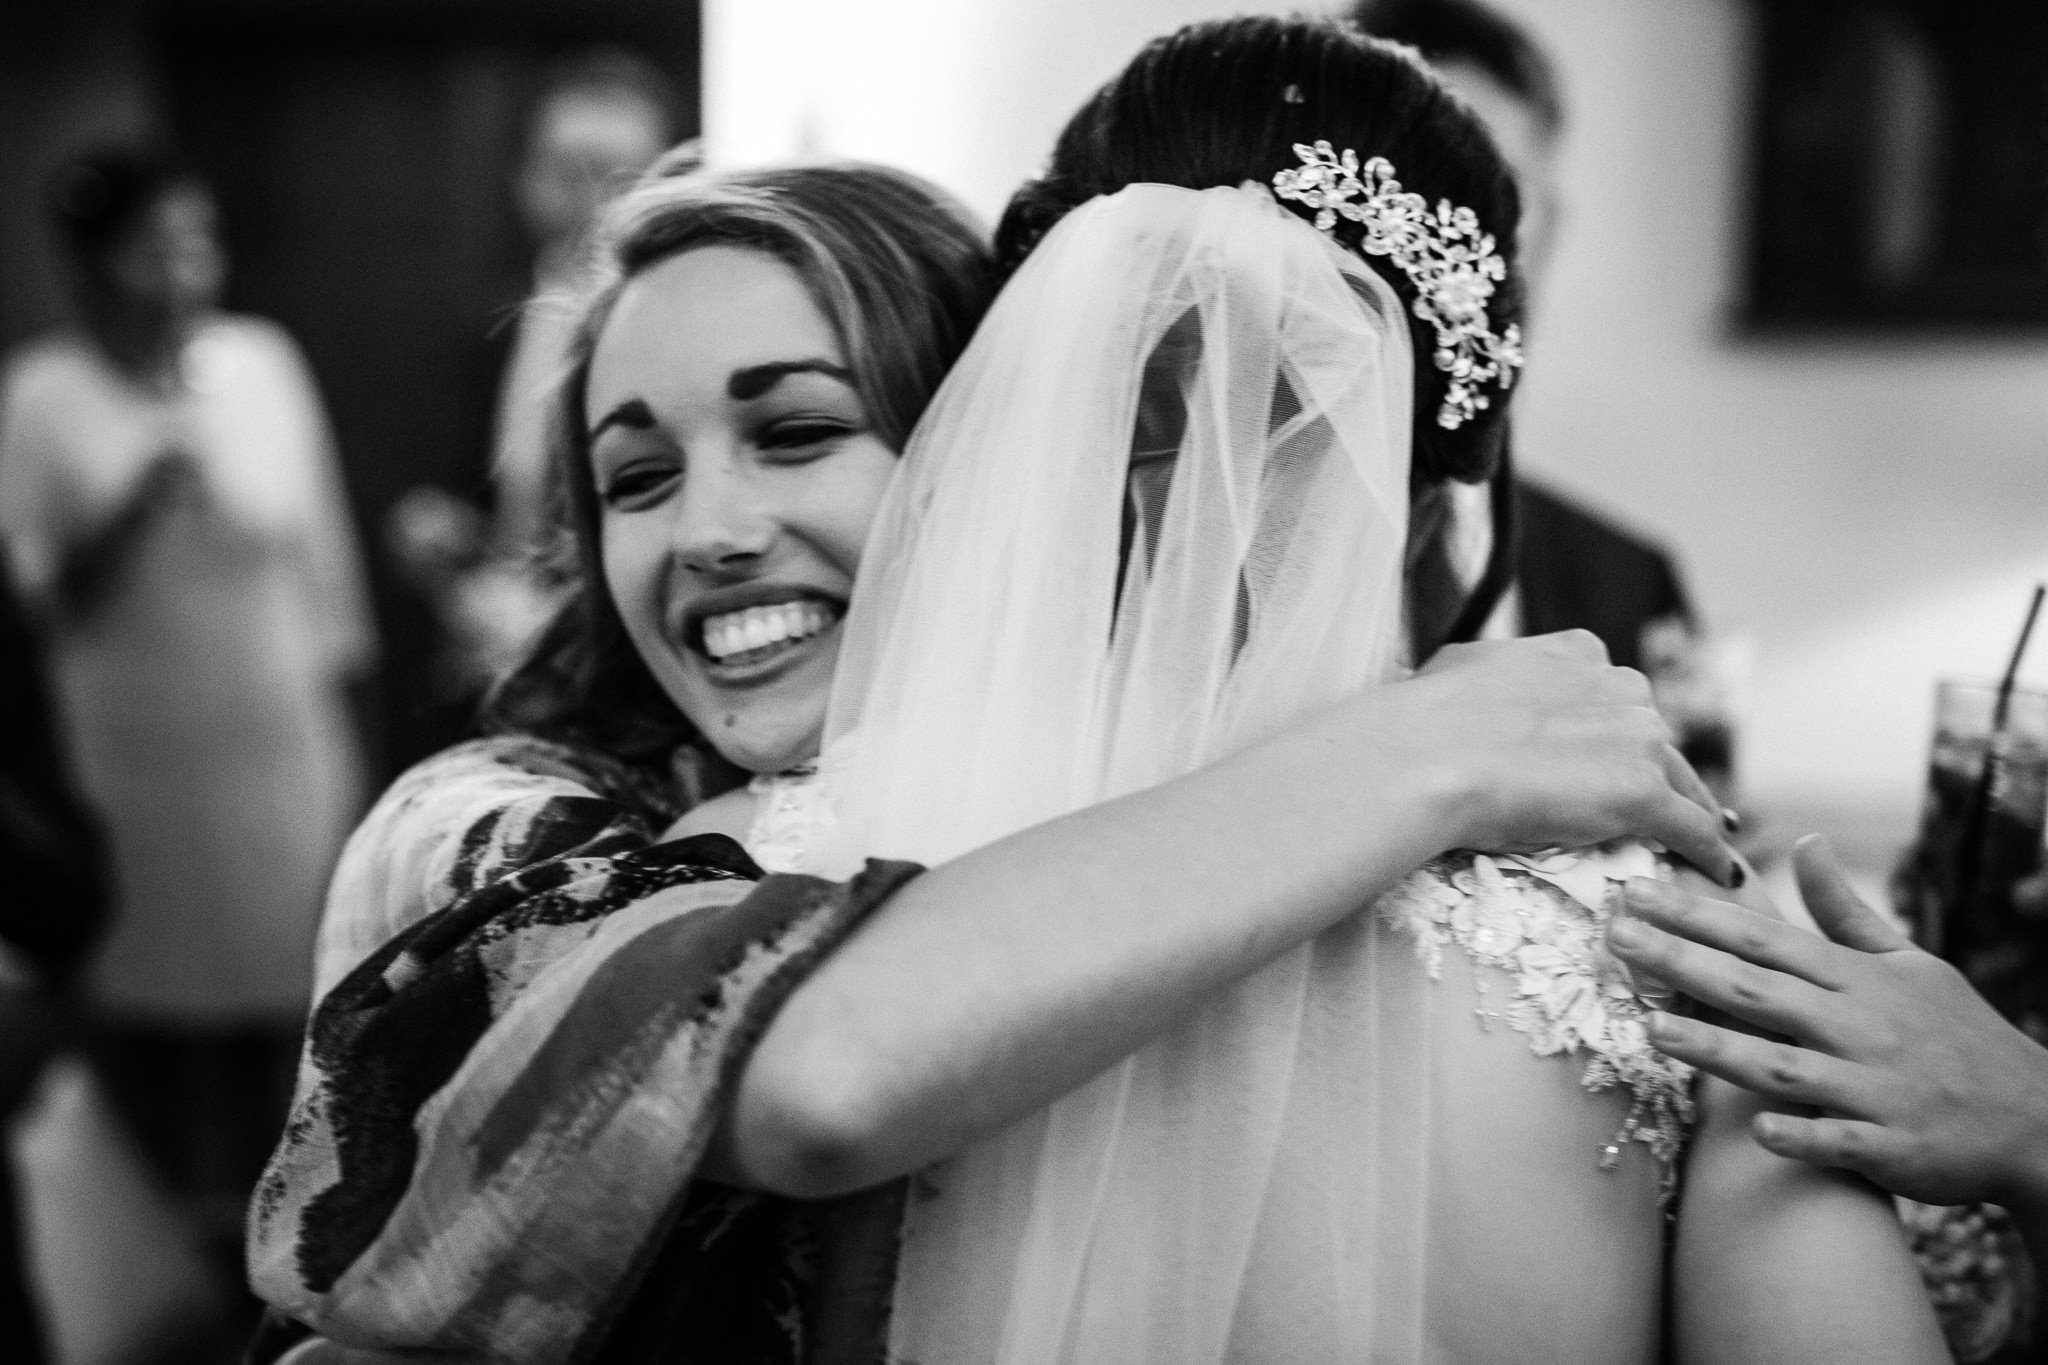  Female guest hugs the bride 